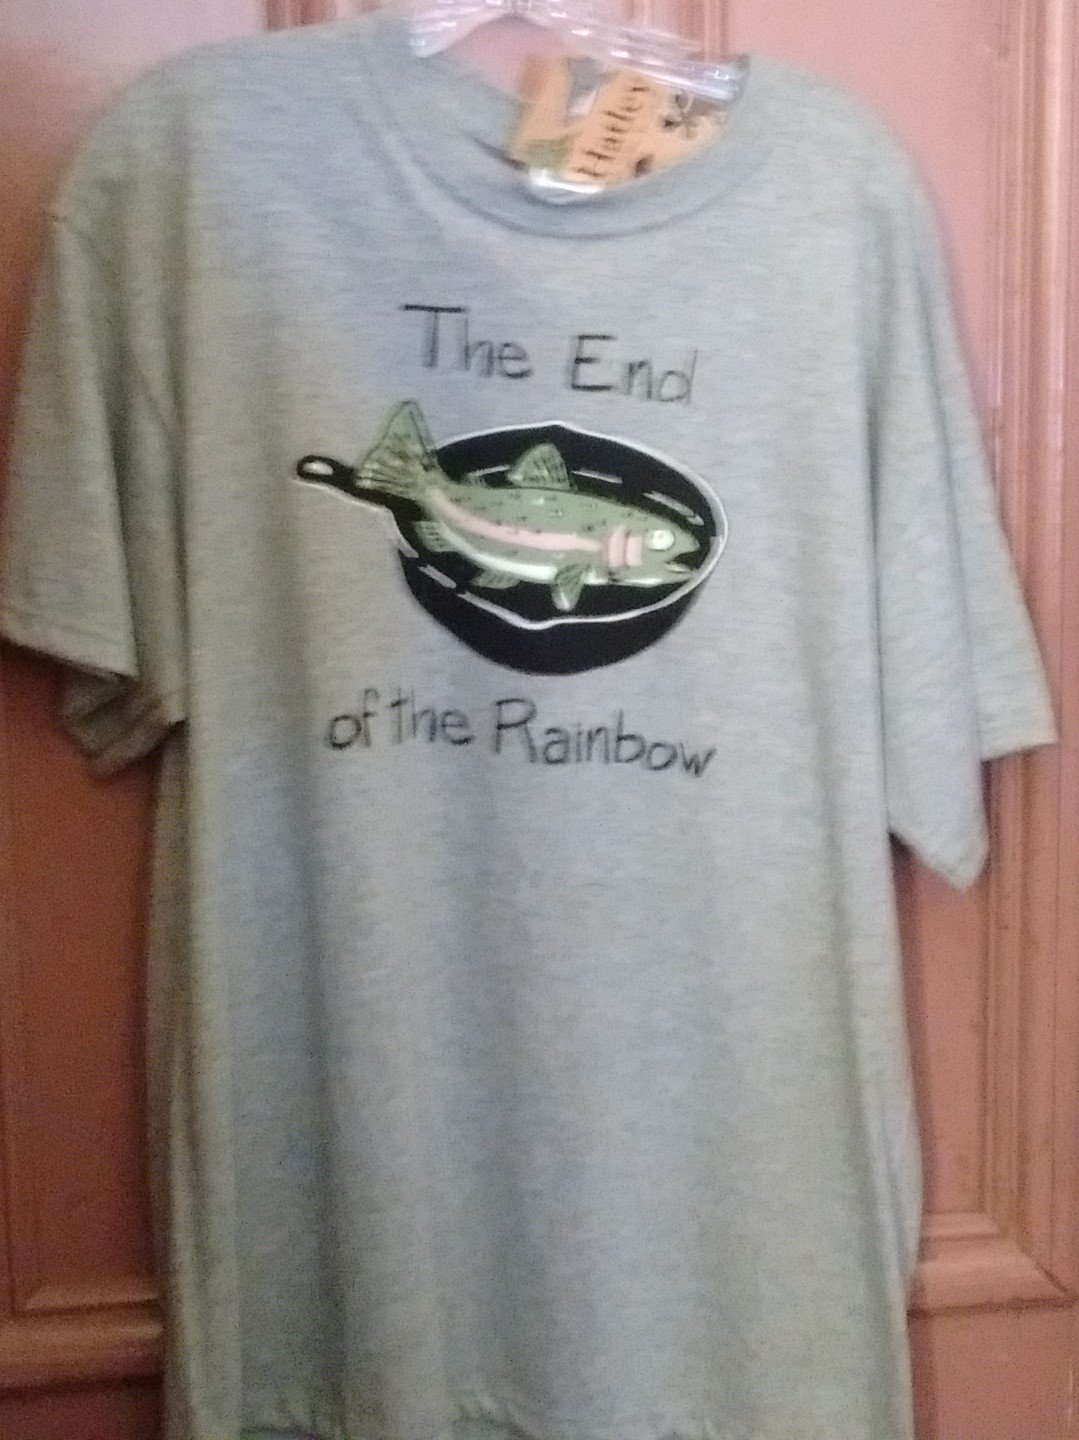 Hatley End of the Rainbow T Shirt 4 Sizes Medium, Large, X Large, XX Large, Gray/Cream Color Unisex - Olde Church Emporium